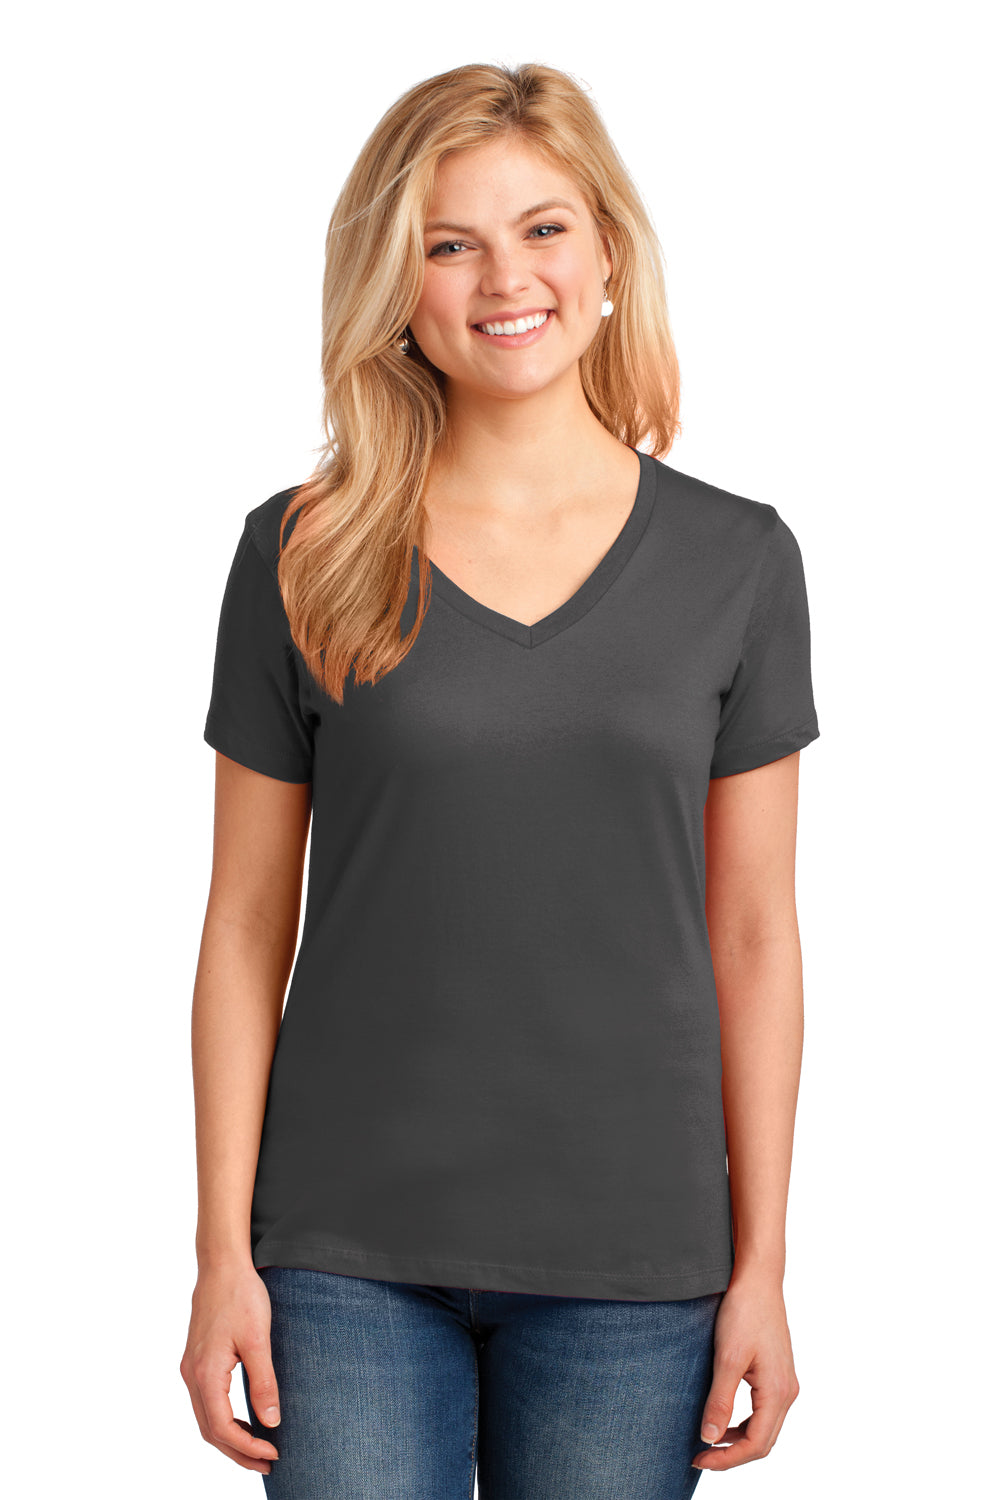 Port & Company LPC54V Womens Core Short Sleeve V-Neck T-Shirt Charcoal Grey Front